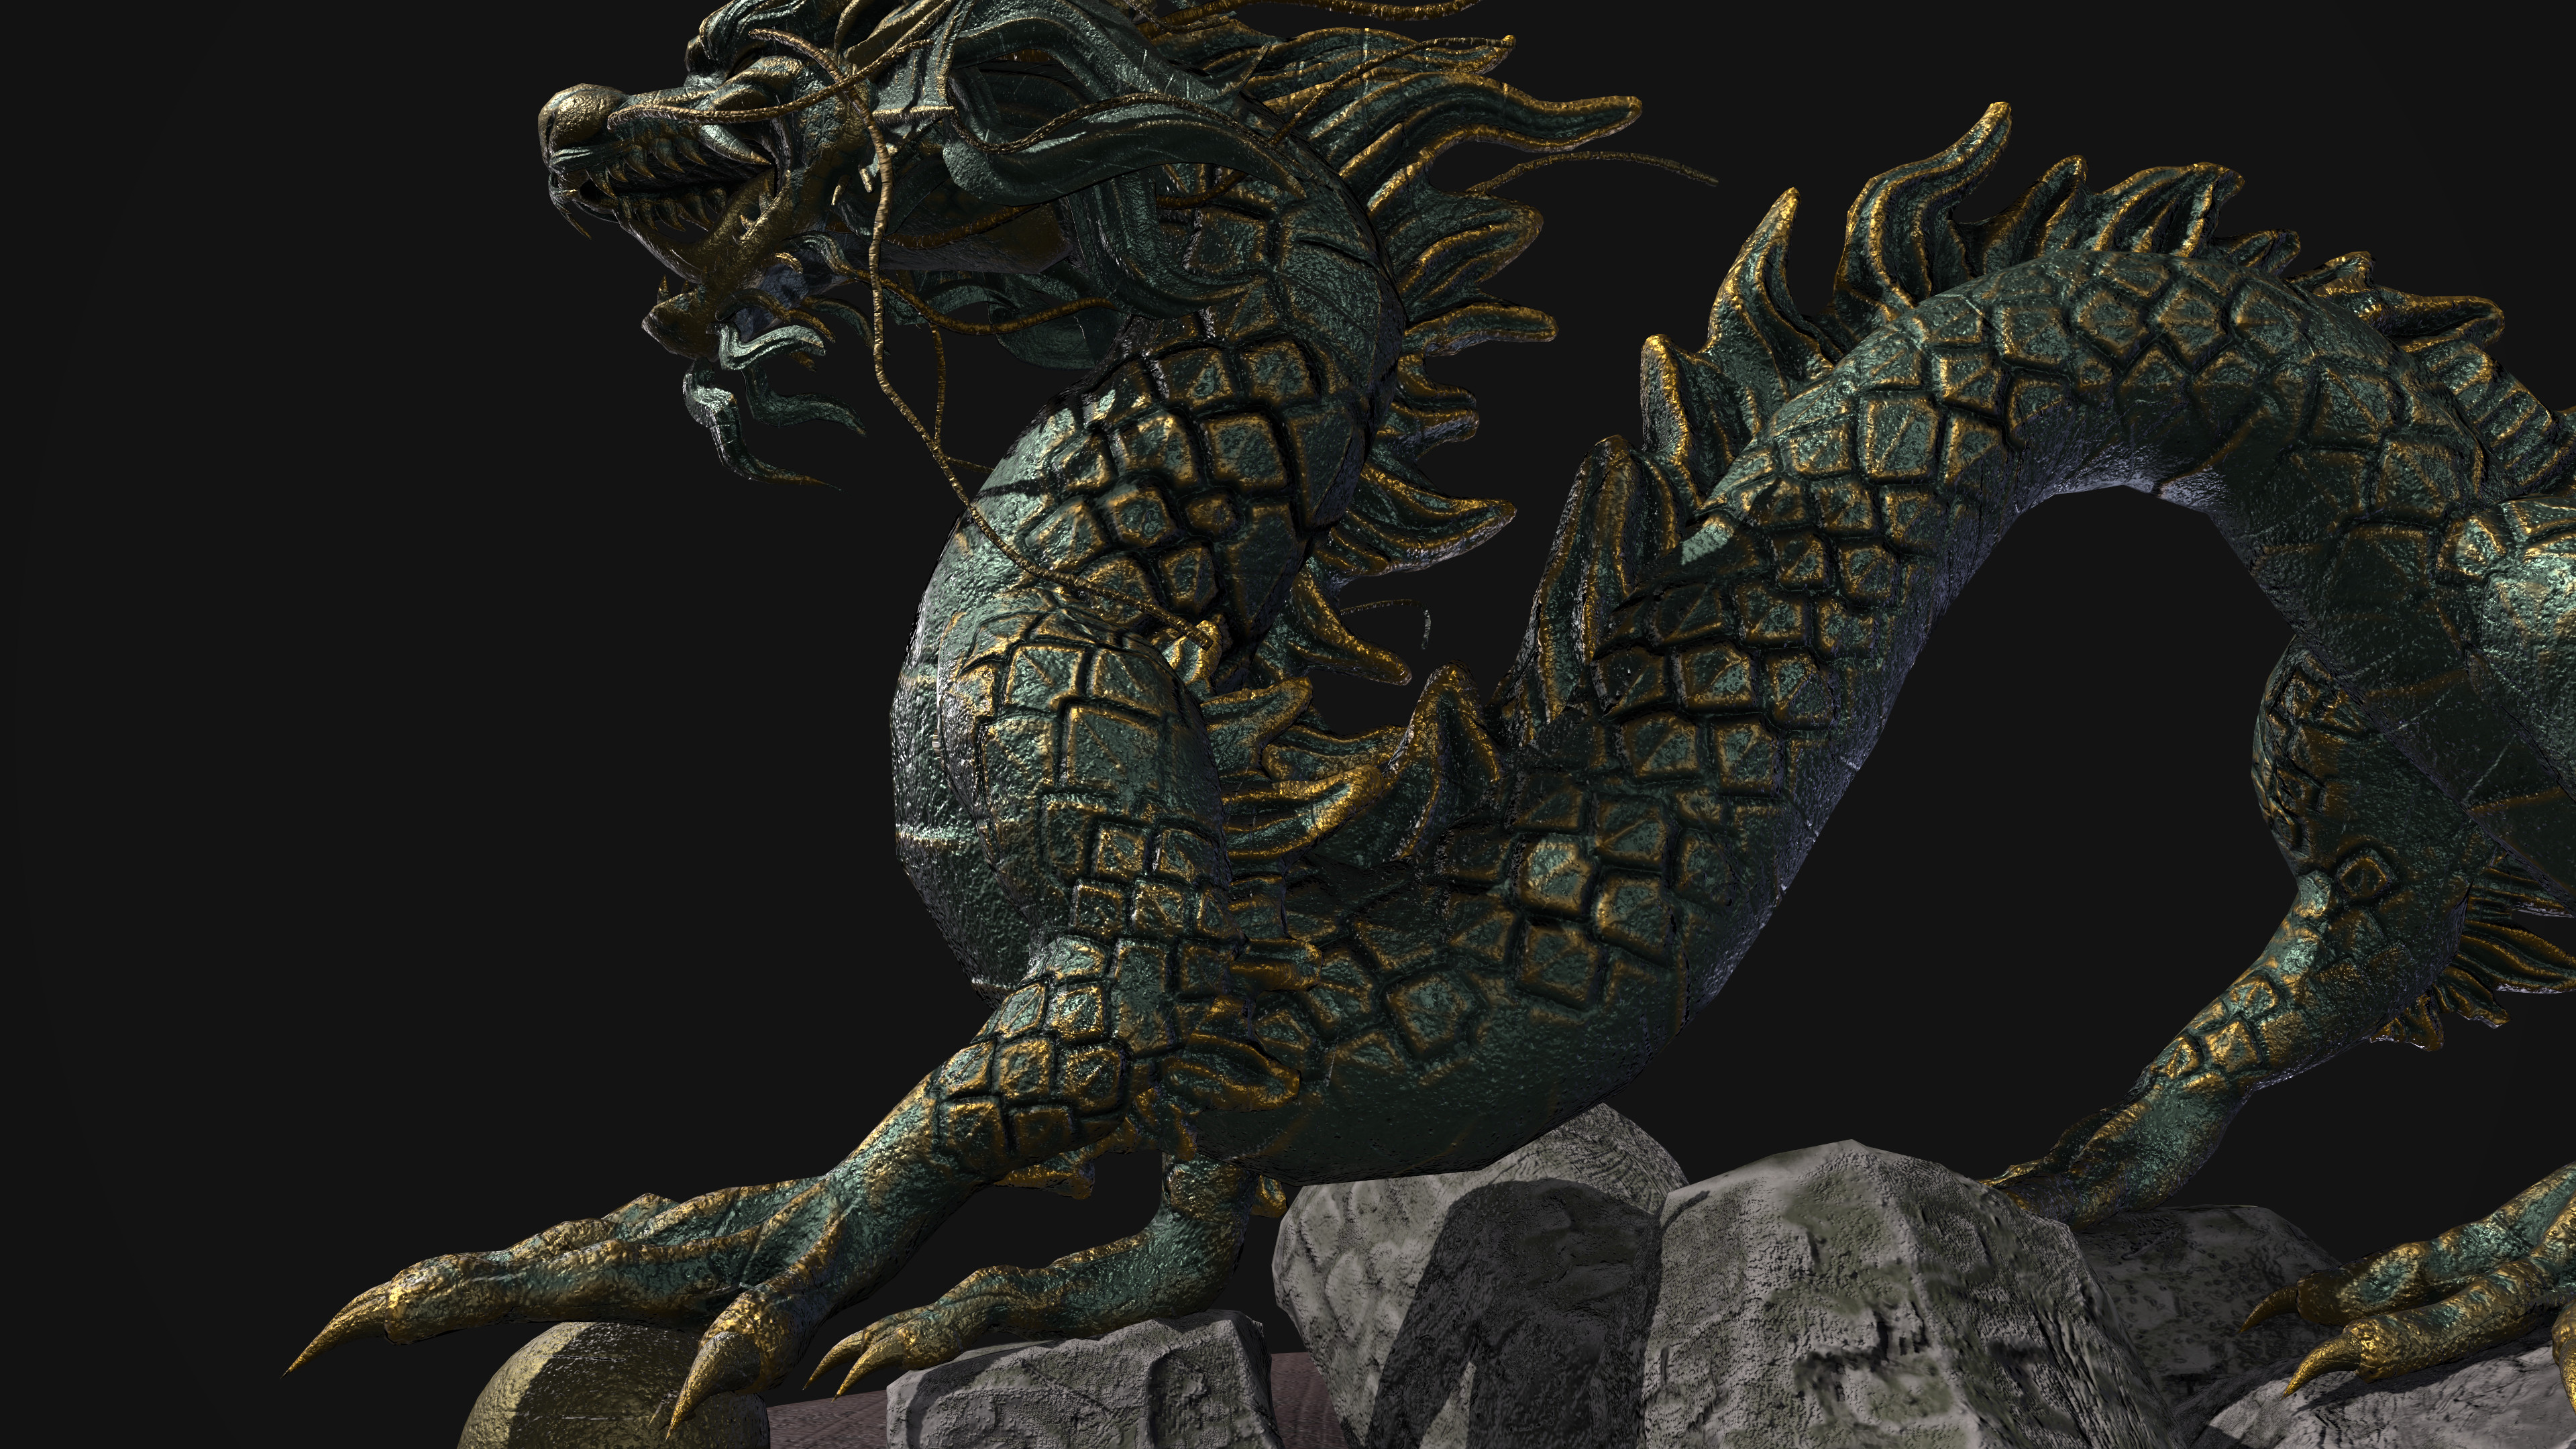 ArtStation - 3D Model - Chinese Dragon - Downloadable